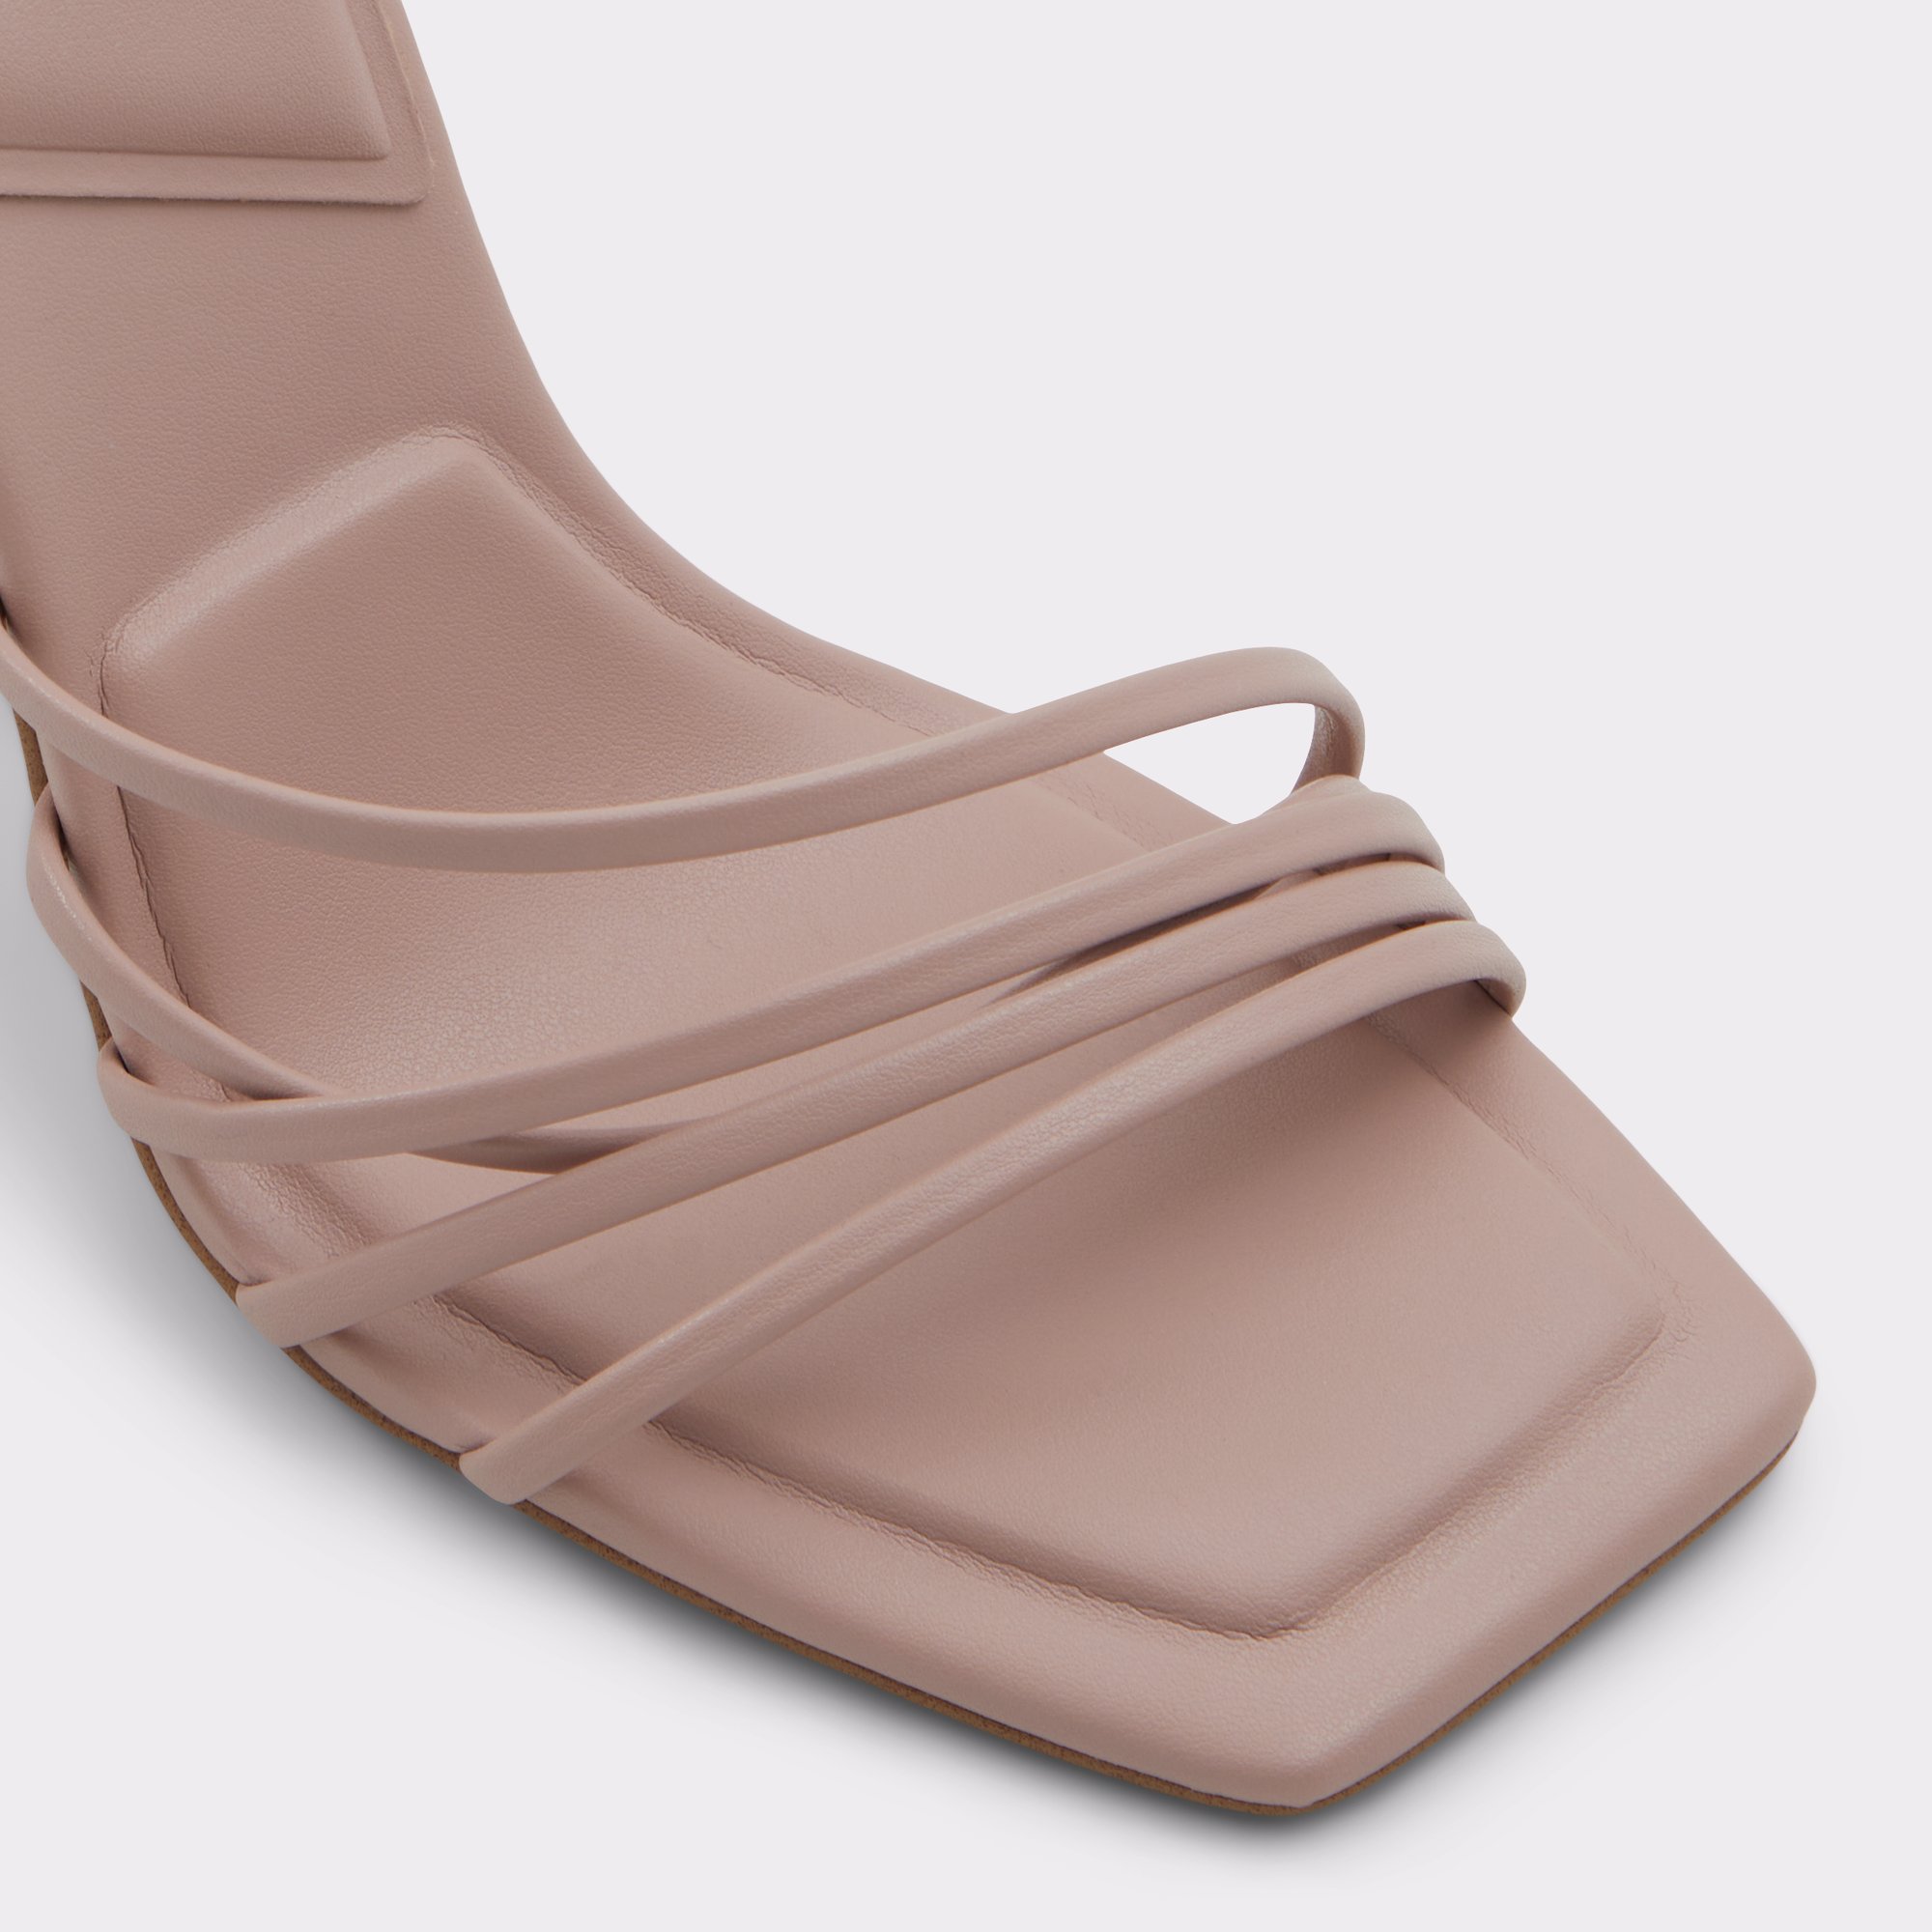 Estela Other Pink Women's Strappy sandals | ALDO Canada